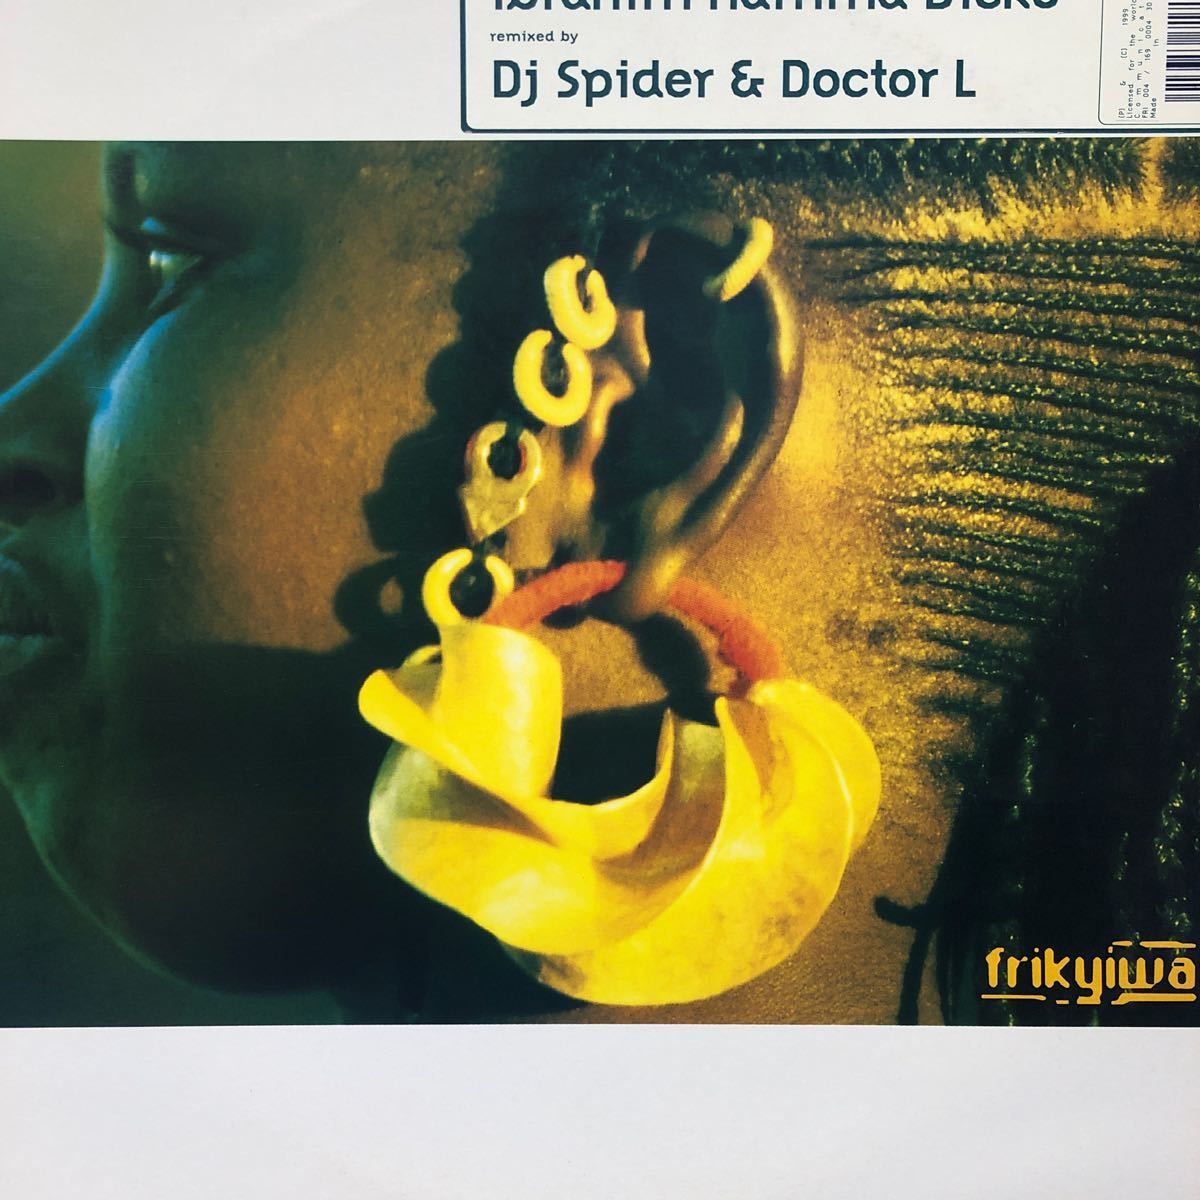 Ibrahim Hamma Dicko Dj Spider&Doctor L 12インチ LP レコード 5点以上落札で送料無料Z_画像1